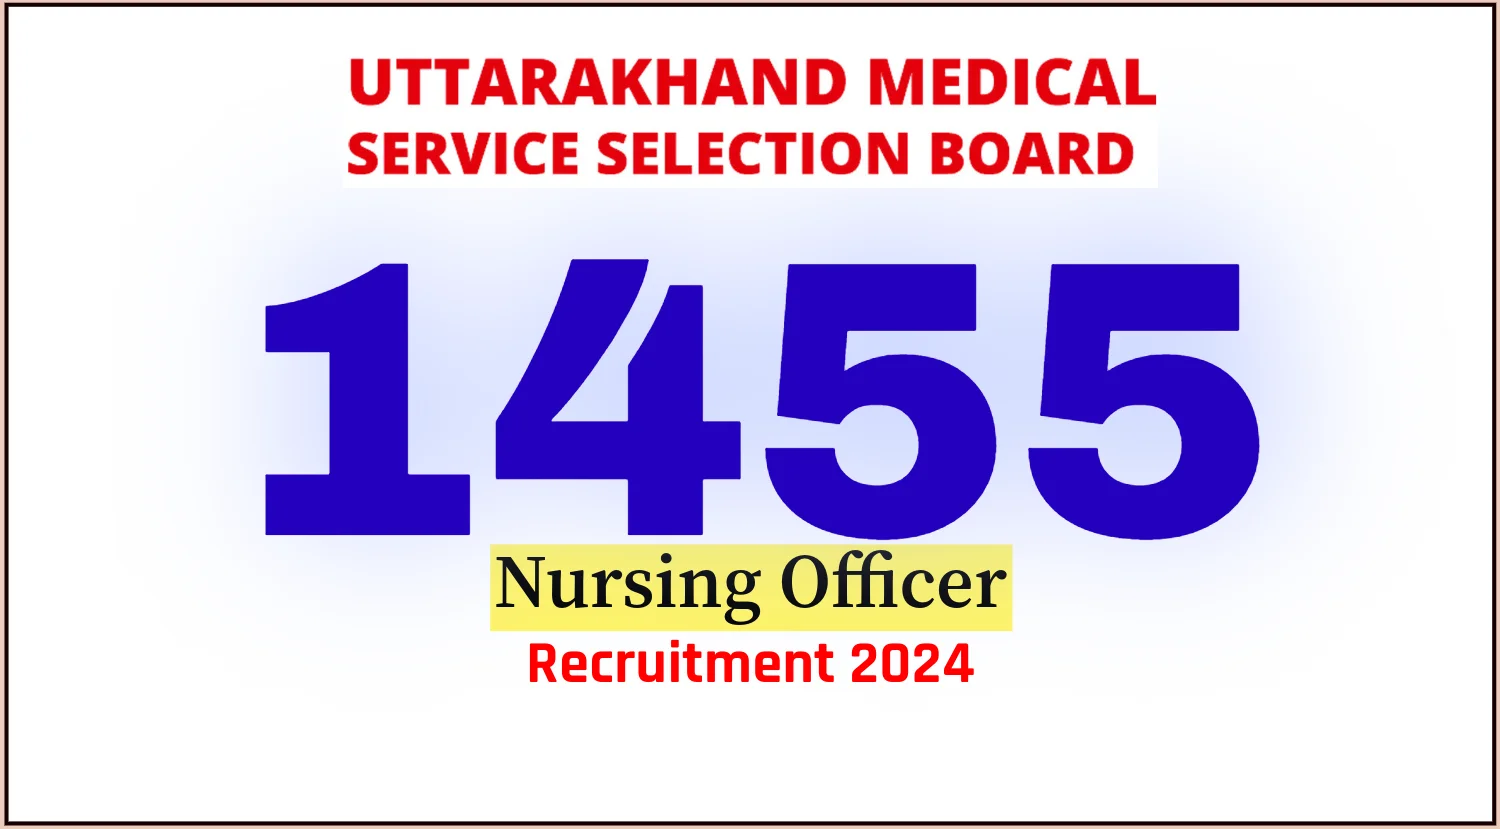 UKMSSB Nursing Officer Recruitment 2024